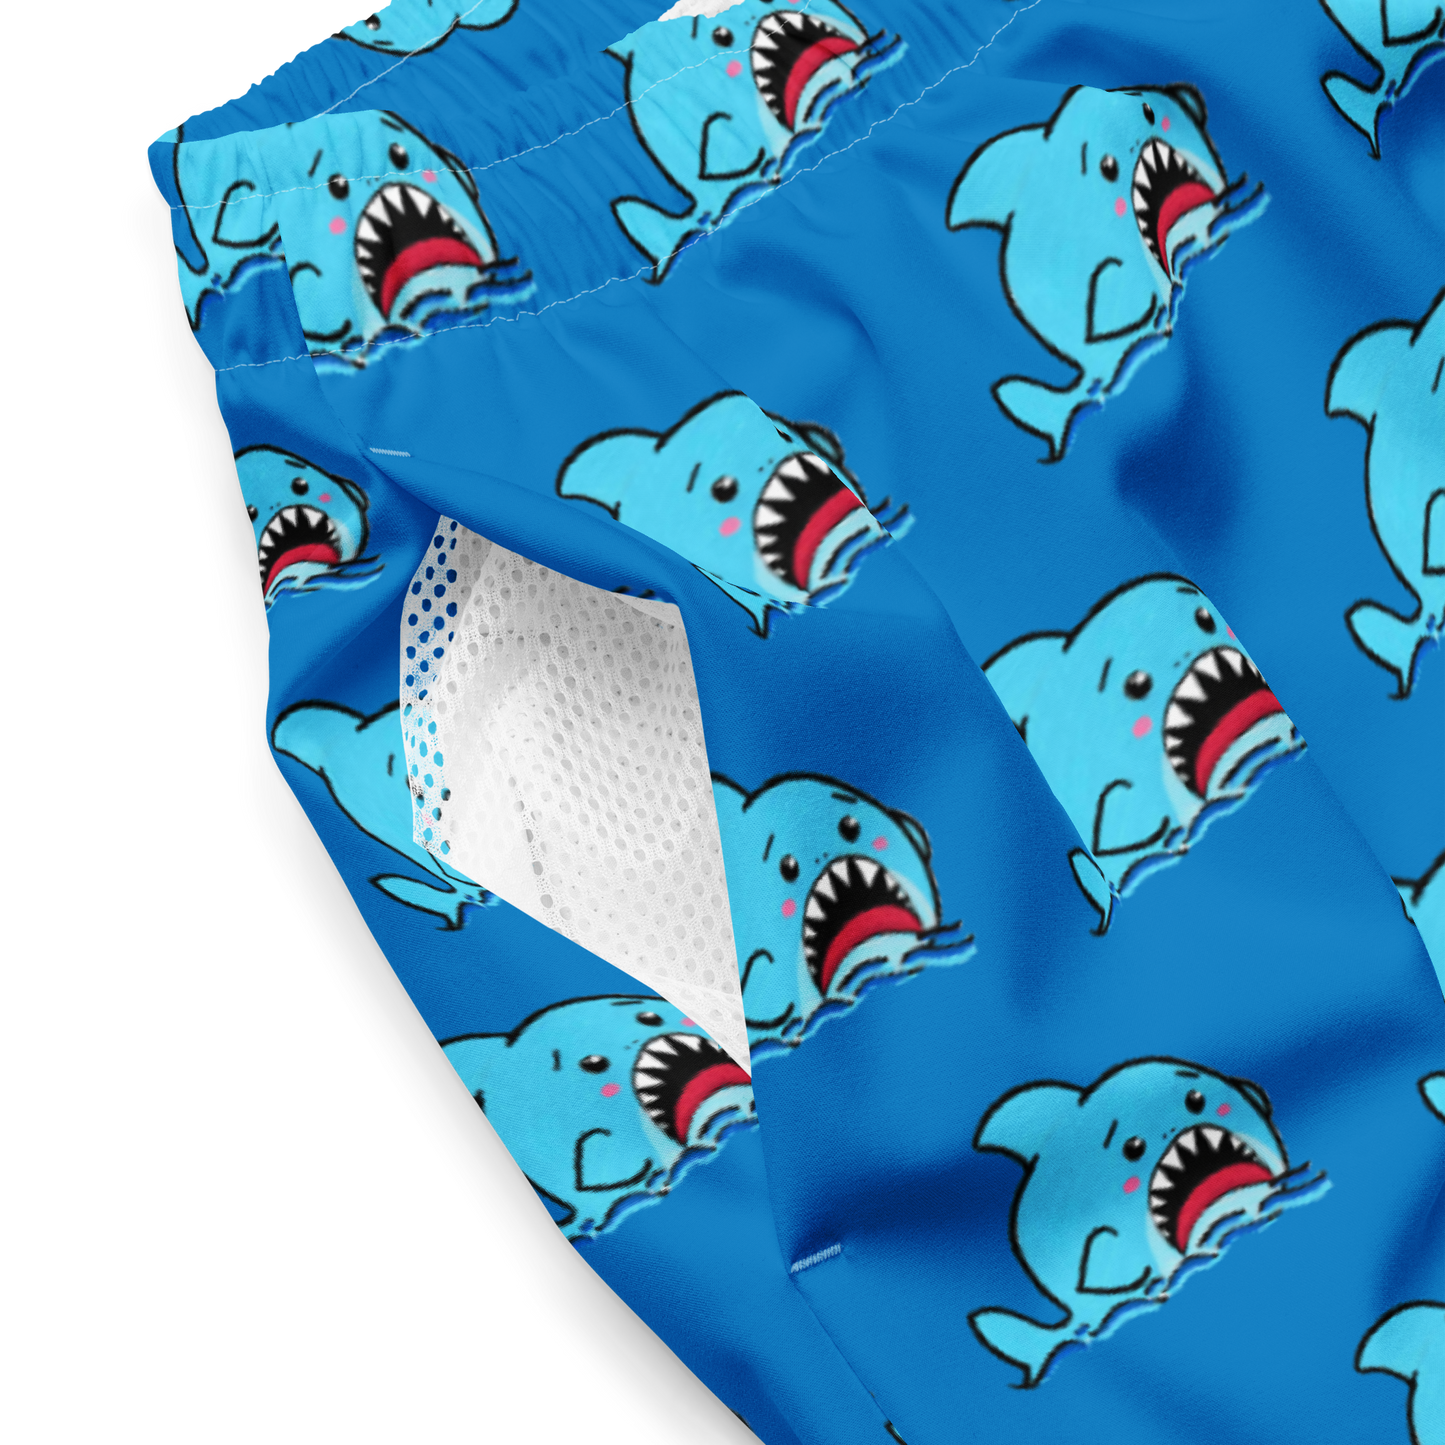 Anxious Shark- Swim trunks